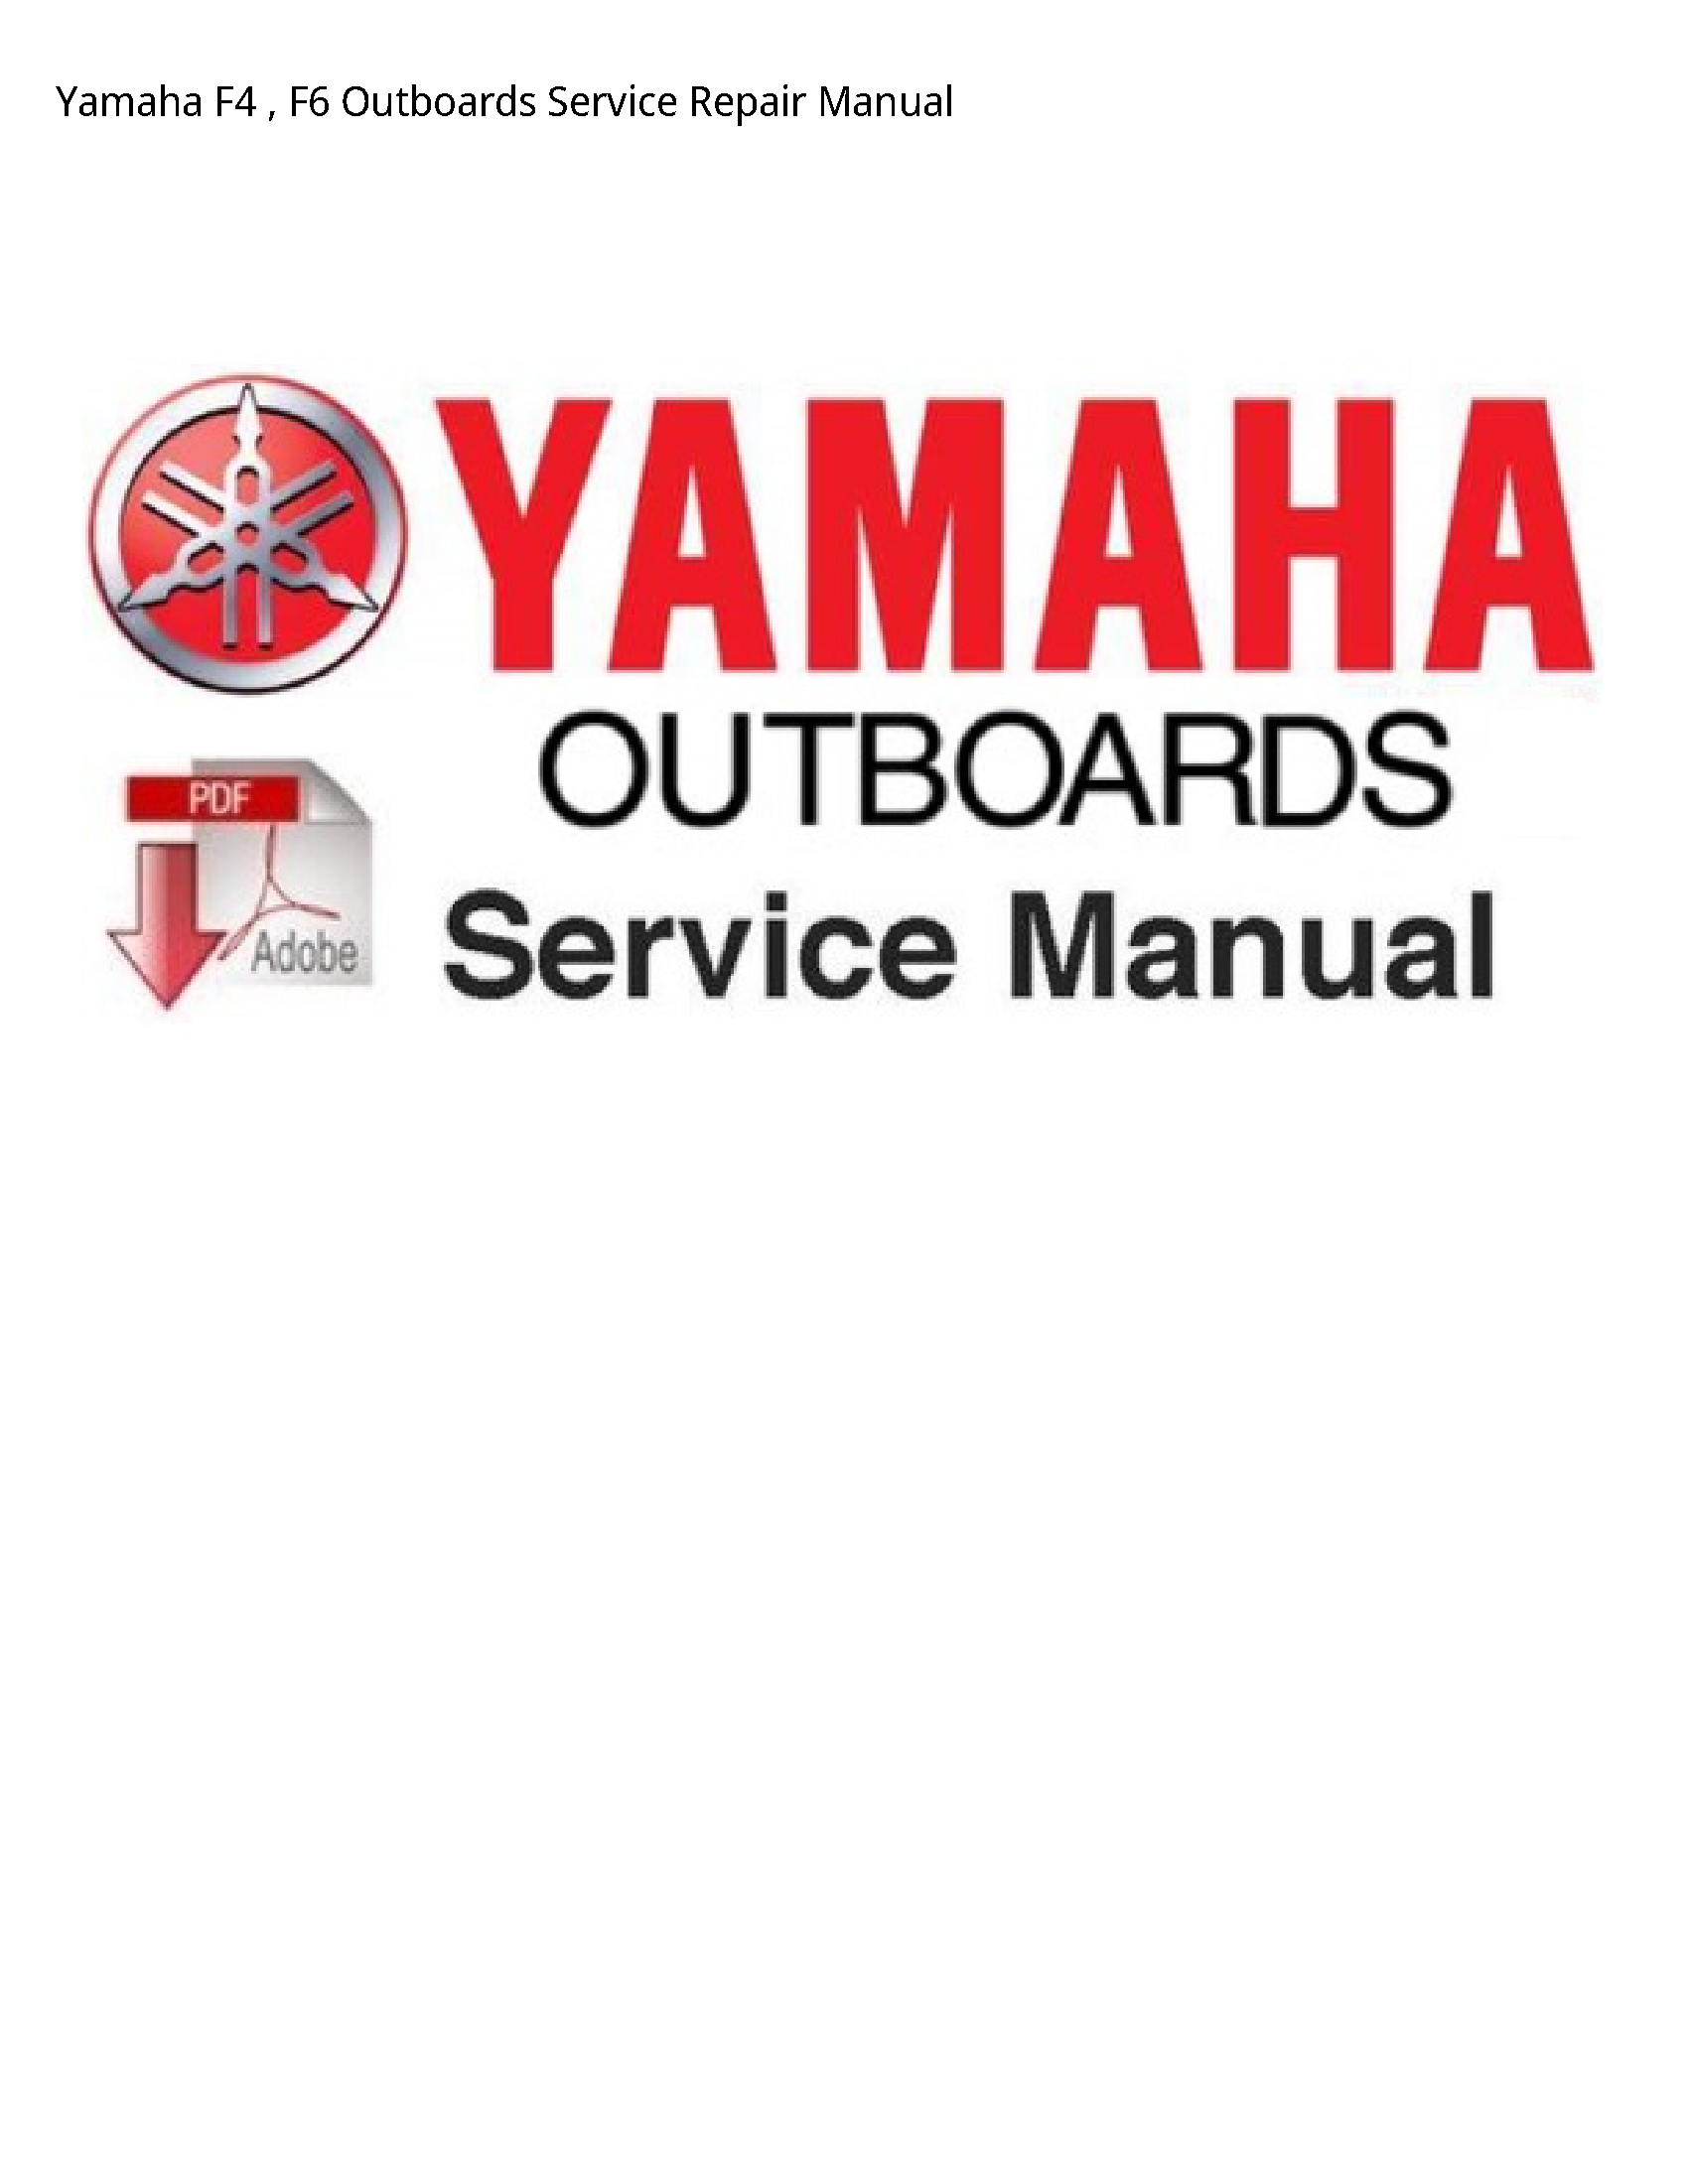 Yamaha F4 Outboards manual